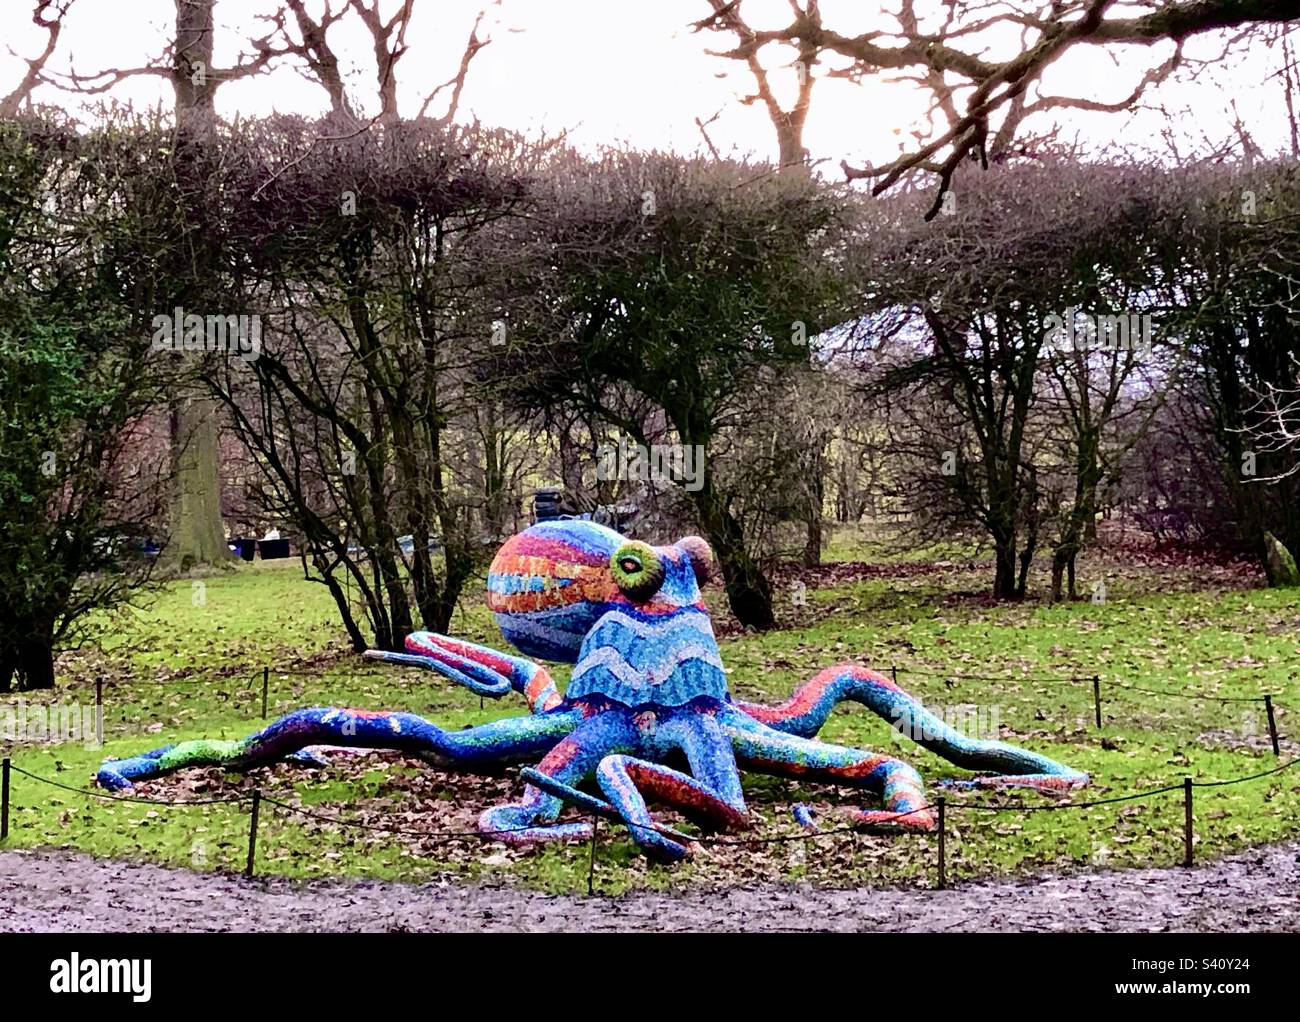 Yorkshire sculpture park - squid Stock Photo